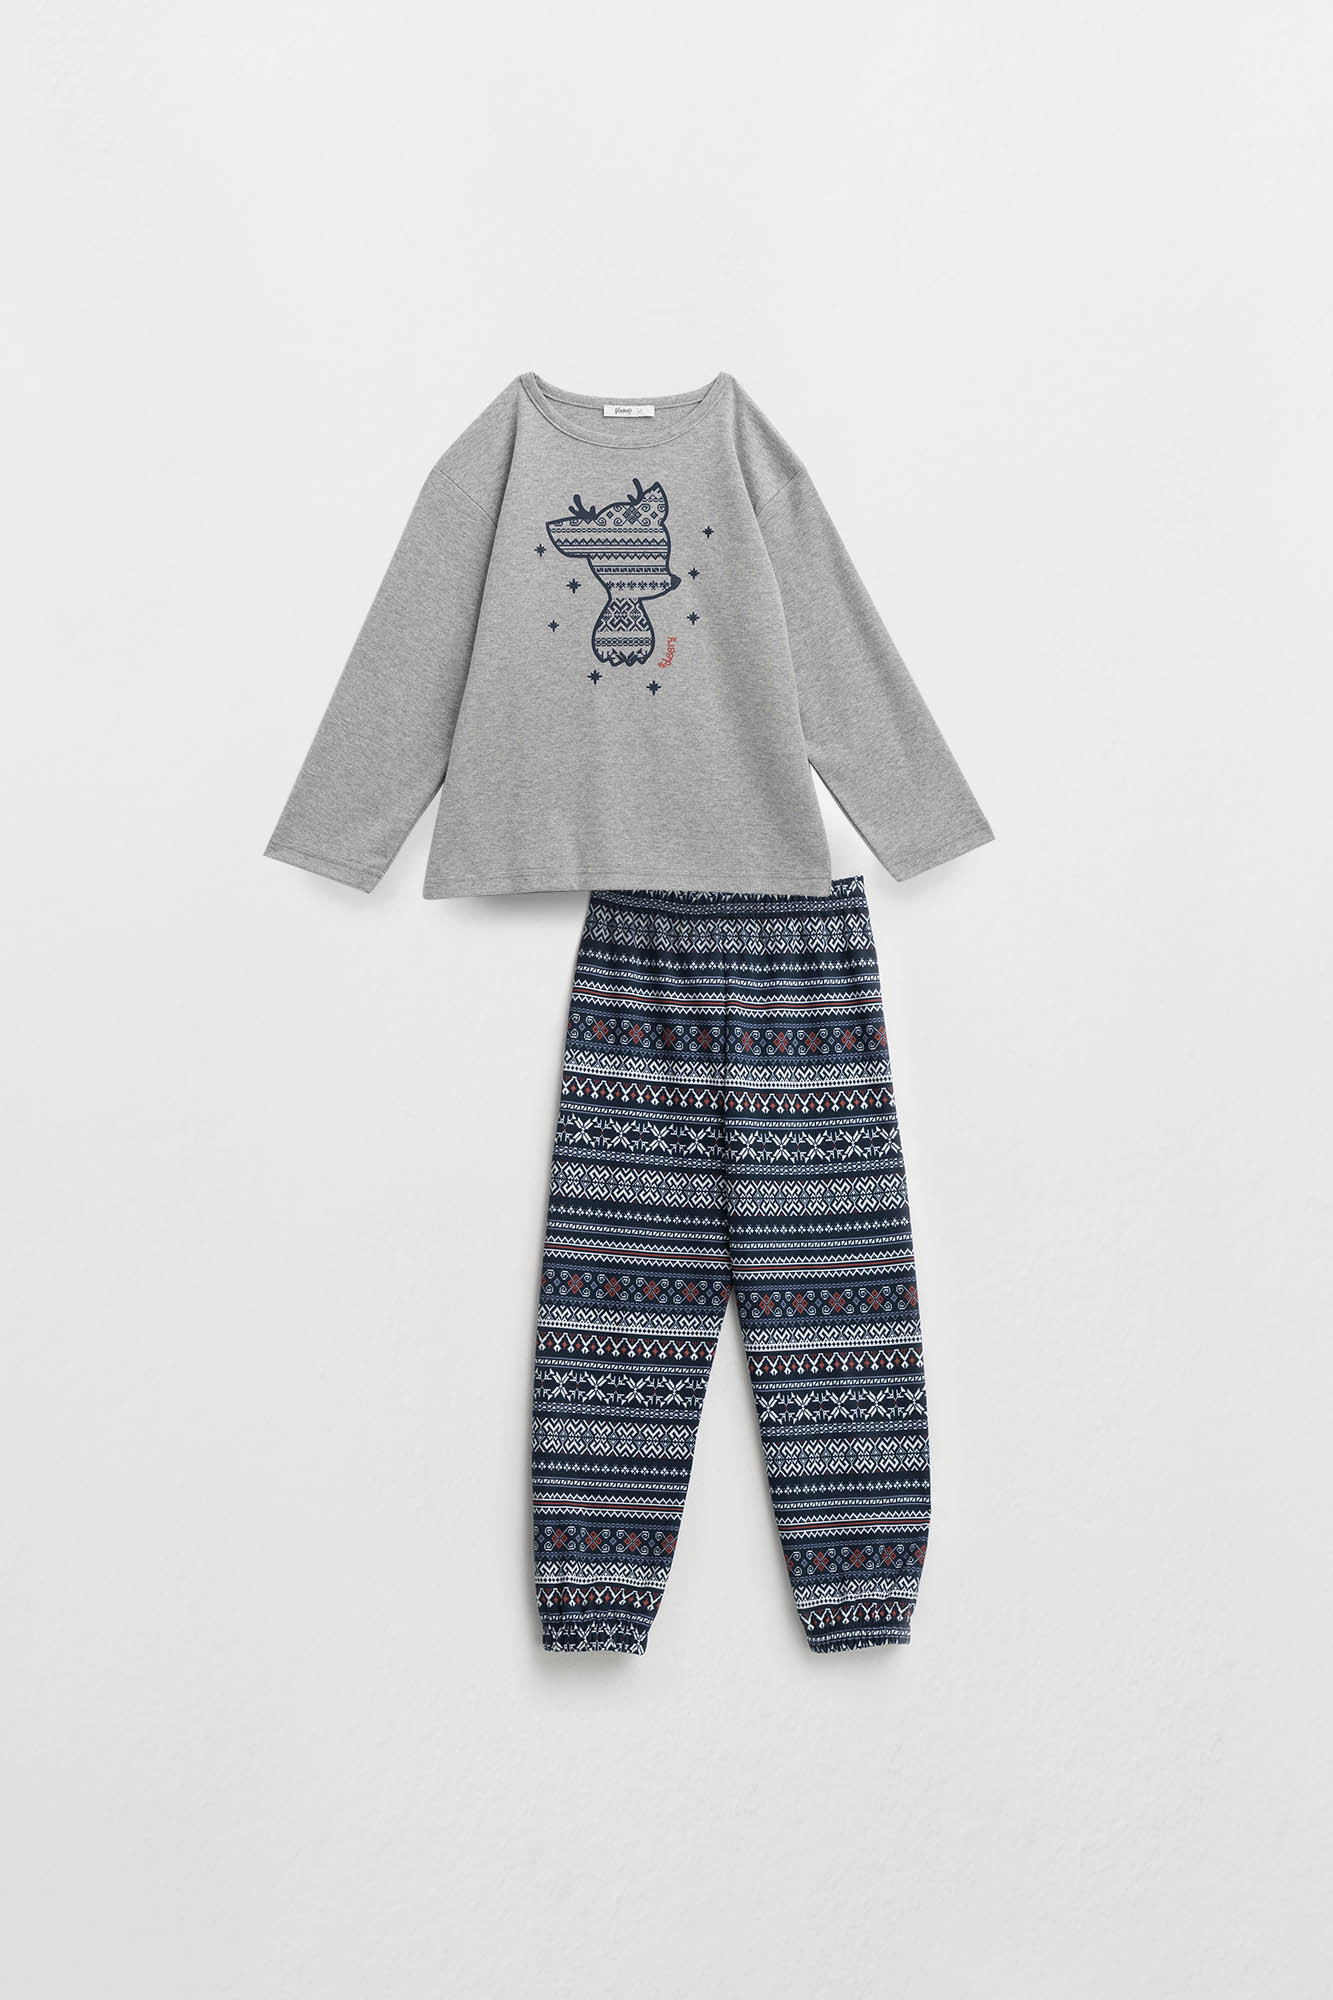 Vamp - Dvoudílné dětské pyžamo - Darby GRAY MELANGE 10 17576 - Vamp